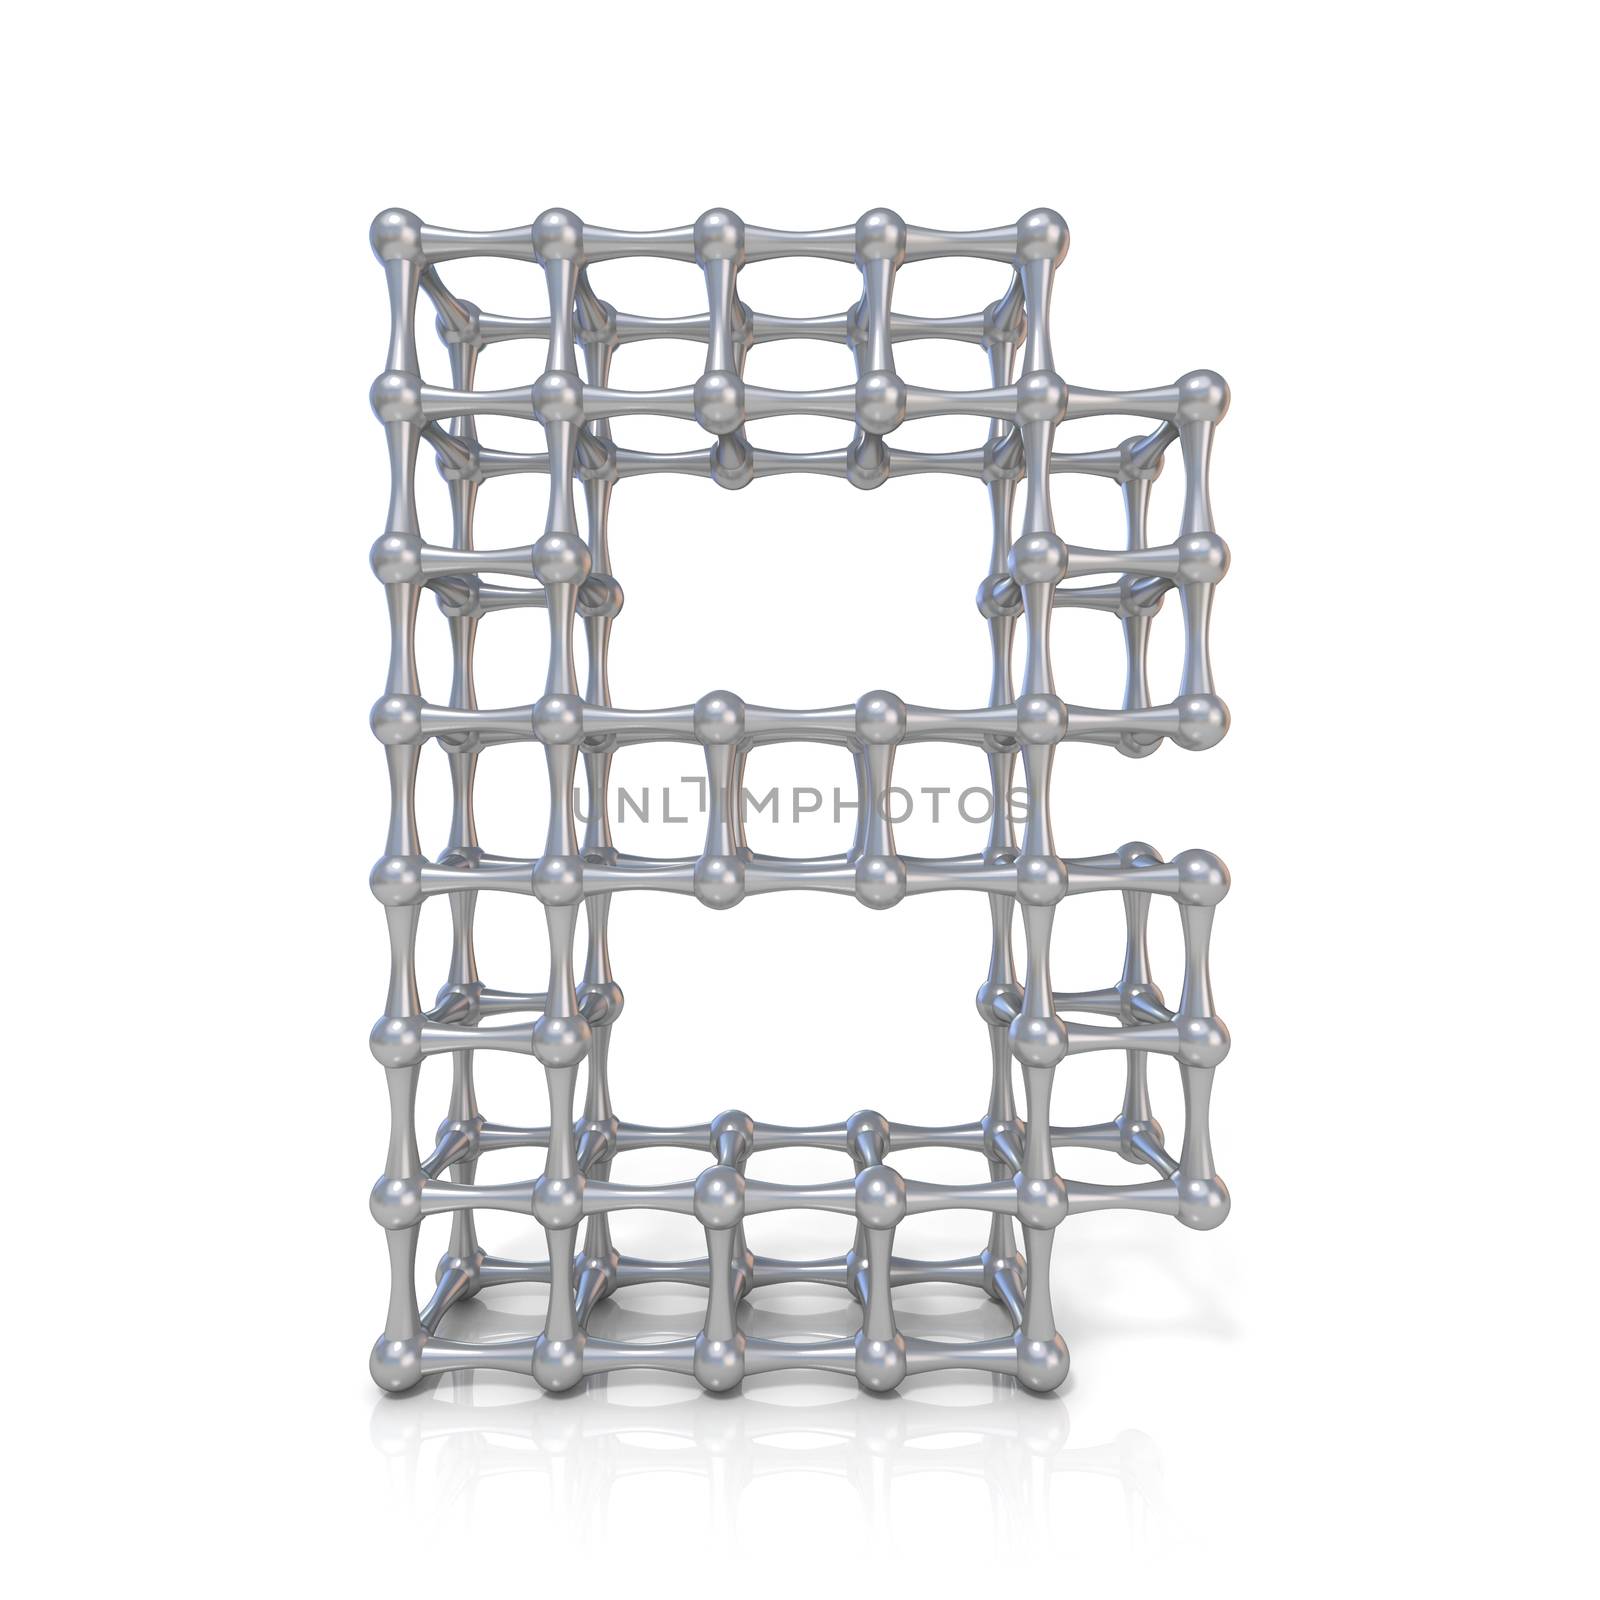 Metal lattice font letter B 3D render illustration isolated on white background